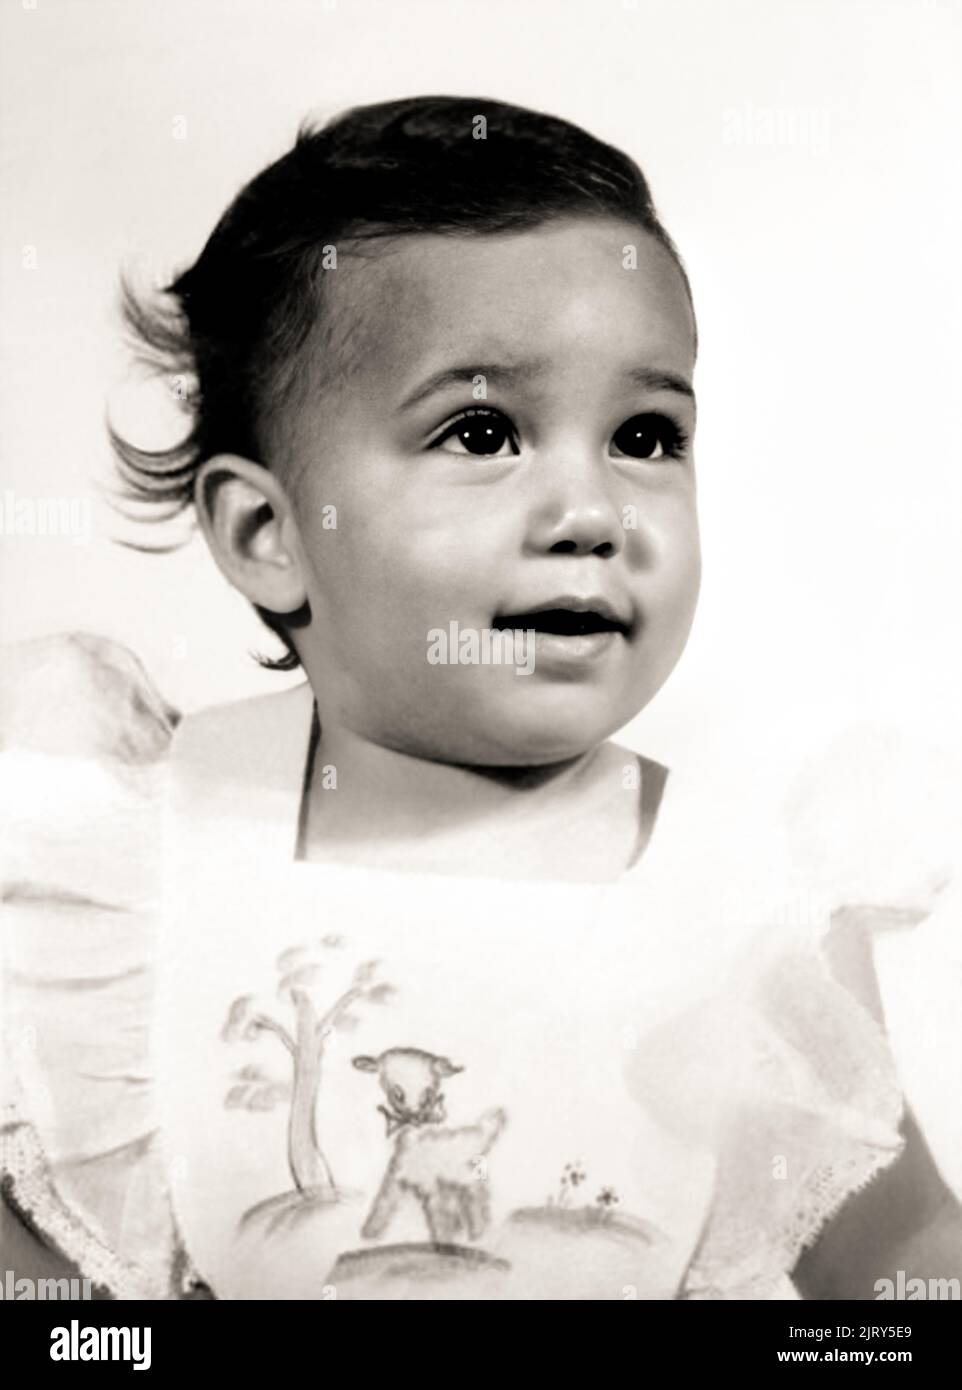 1947 , USA : The celebrated american Pop singer and actress  CHER ( Cherilyn Sarkisian LaPierre , born 20 may 1946 ) when was  a baby aged 1 . Unknown photographer. - HISTORY - FOTO STORICHE - personalità da giovane giovani - ragazza - personality personalities when was young girl - INFANZIA - CHILDHOOD - POP MUSIC - MUSICA - cantante - BAMBINI - BAMBINA - CHILD - CHILDREN - BAMBINO - CHILDHOOD - INFANZIA - BABY -  smile - sorriso --- ARCHIVIO GBB Stock Photo